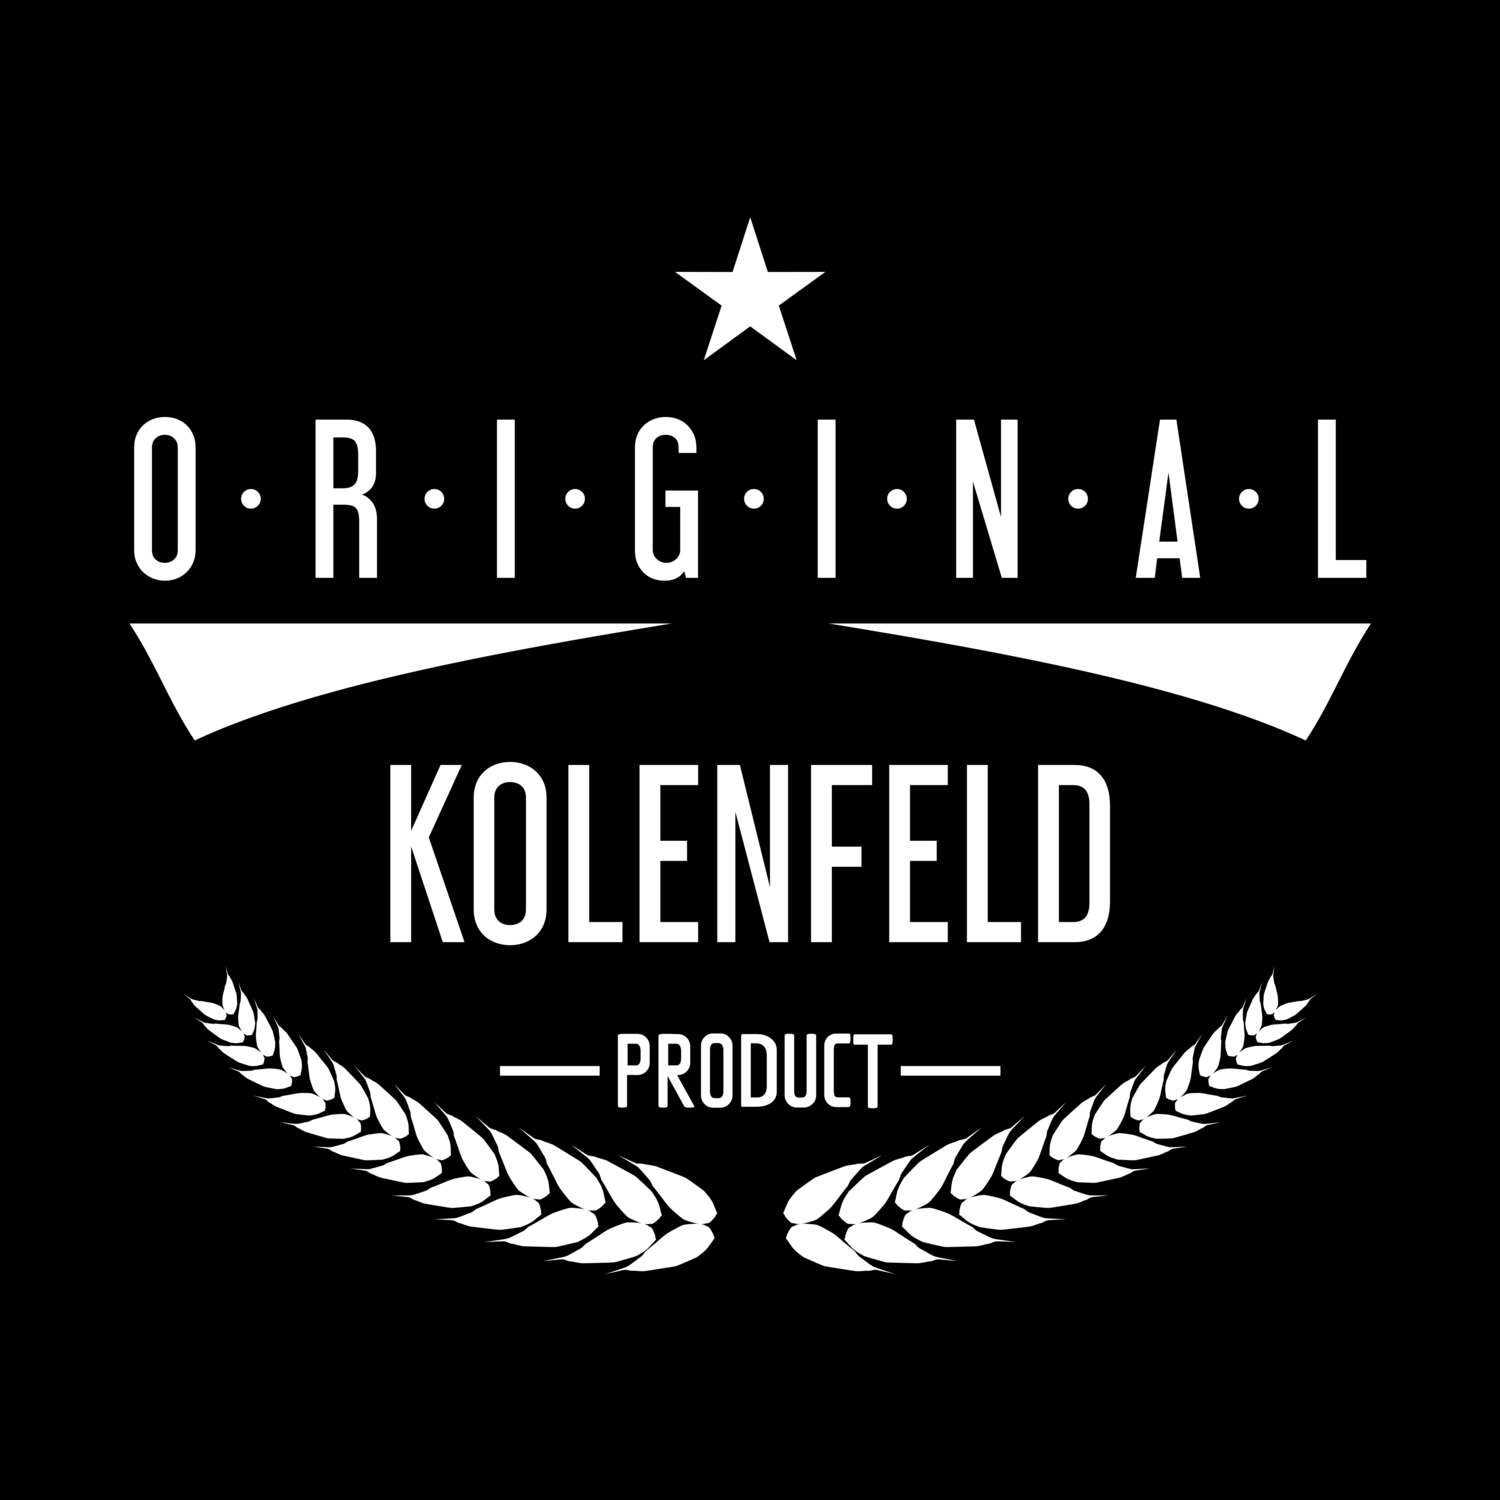 Kolenfeld T-Shirt »Original Product«